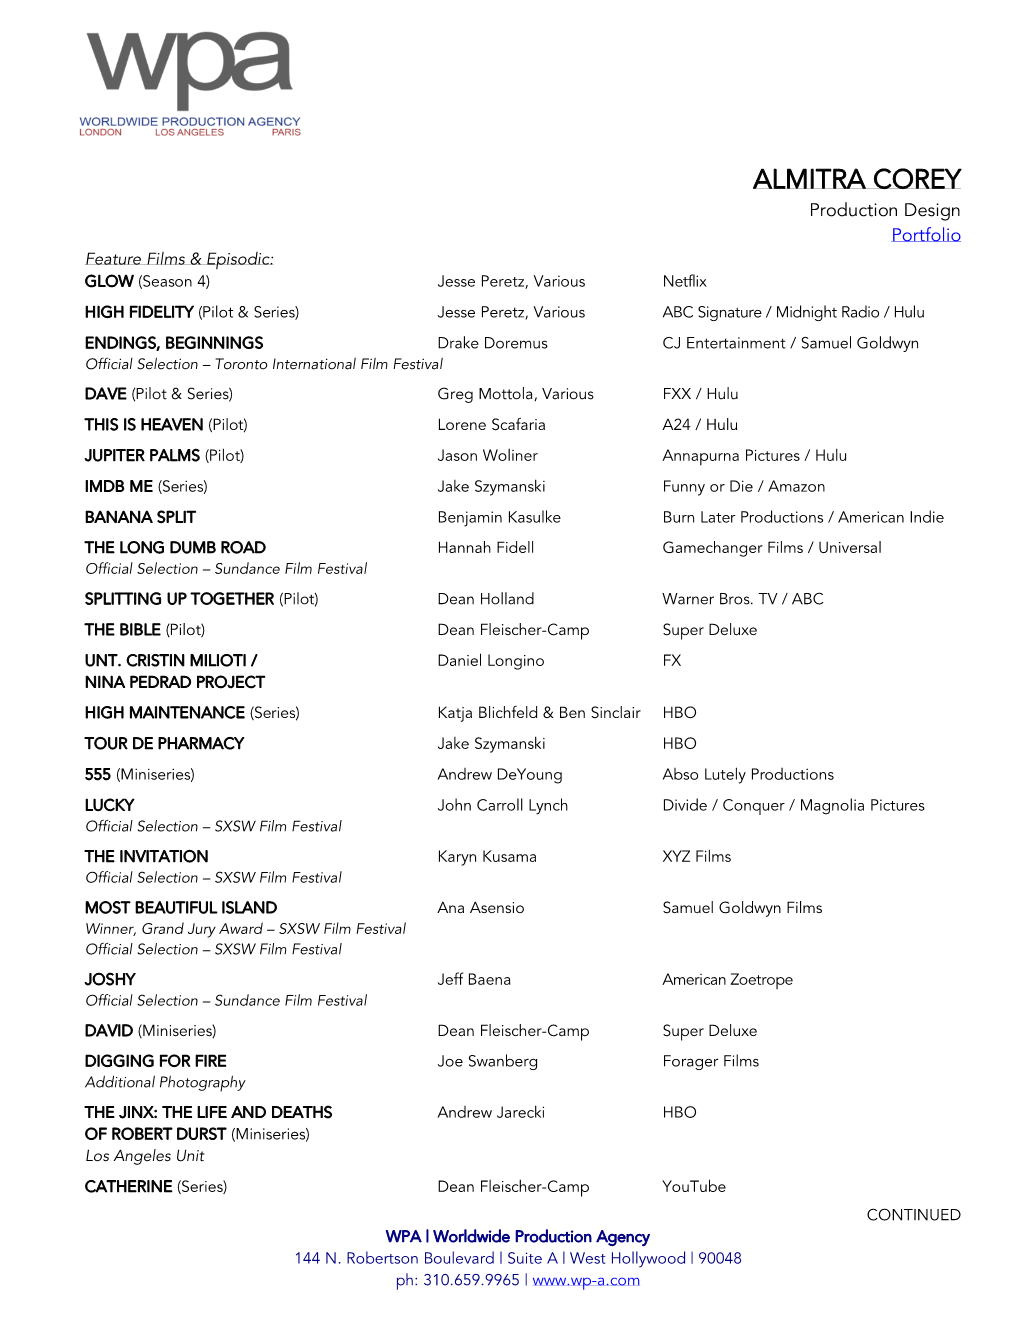 ALMITRA COREY Production Design Portfolio Feature Films & Episodic: GLOW (Season 4) Jesse Peretz, Various Netflix